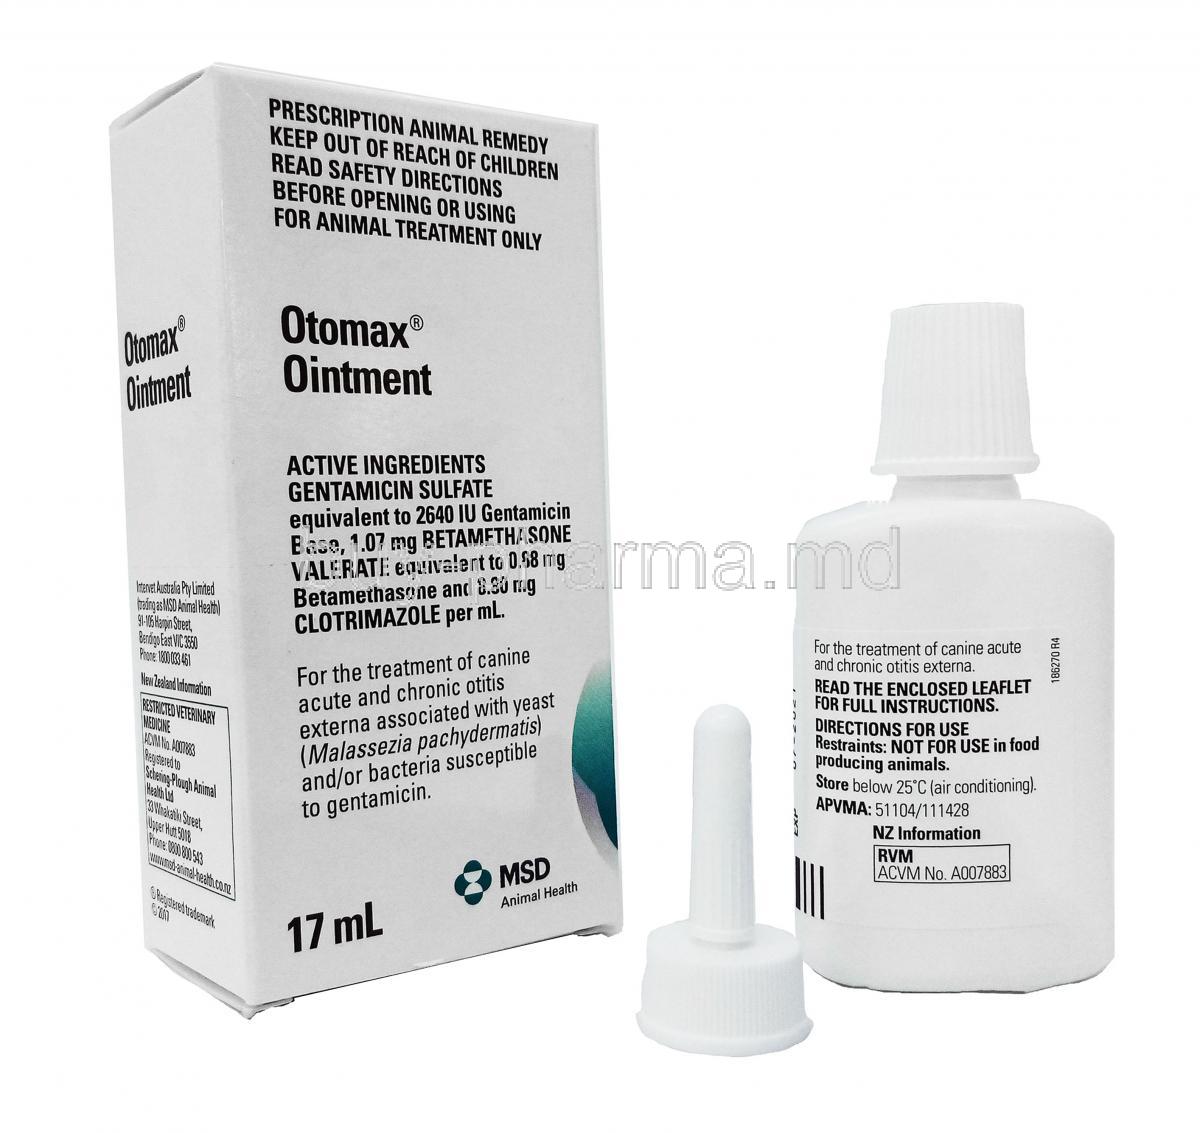 Otomax Ointment, Gentamicin 2640 IU/ Betamethasone 0.88 mg/ Clotrimazole 8.80 mg per 1ml, 17ml, Box, bottle